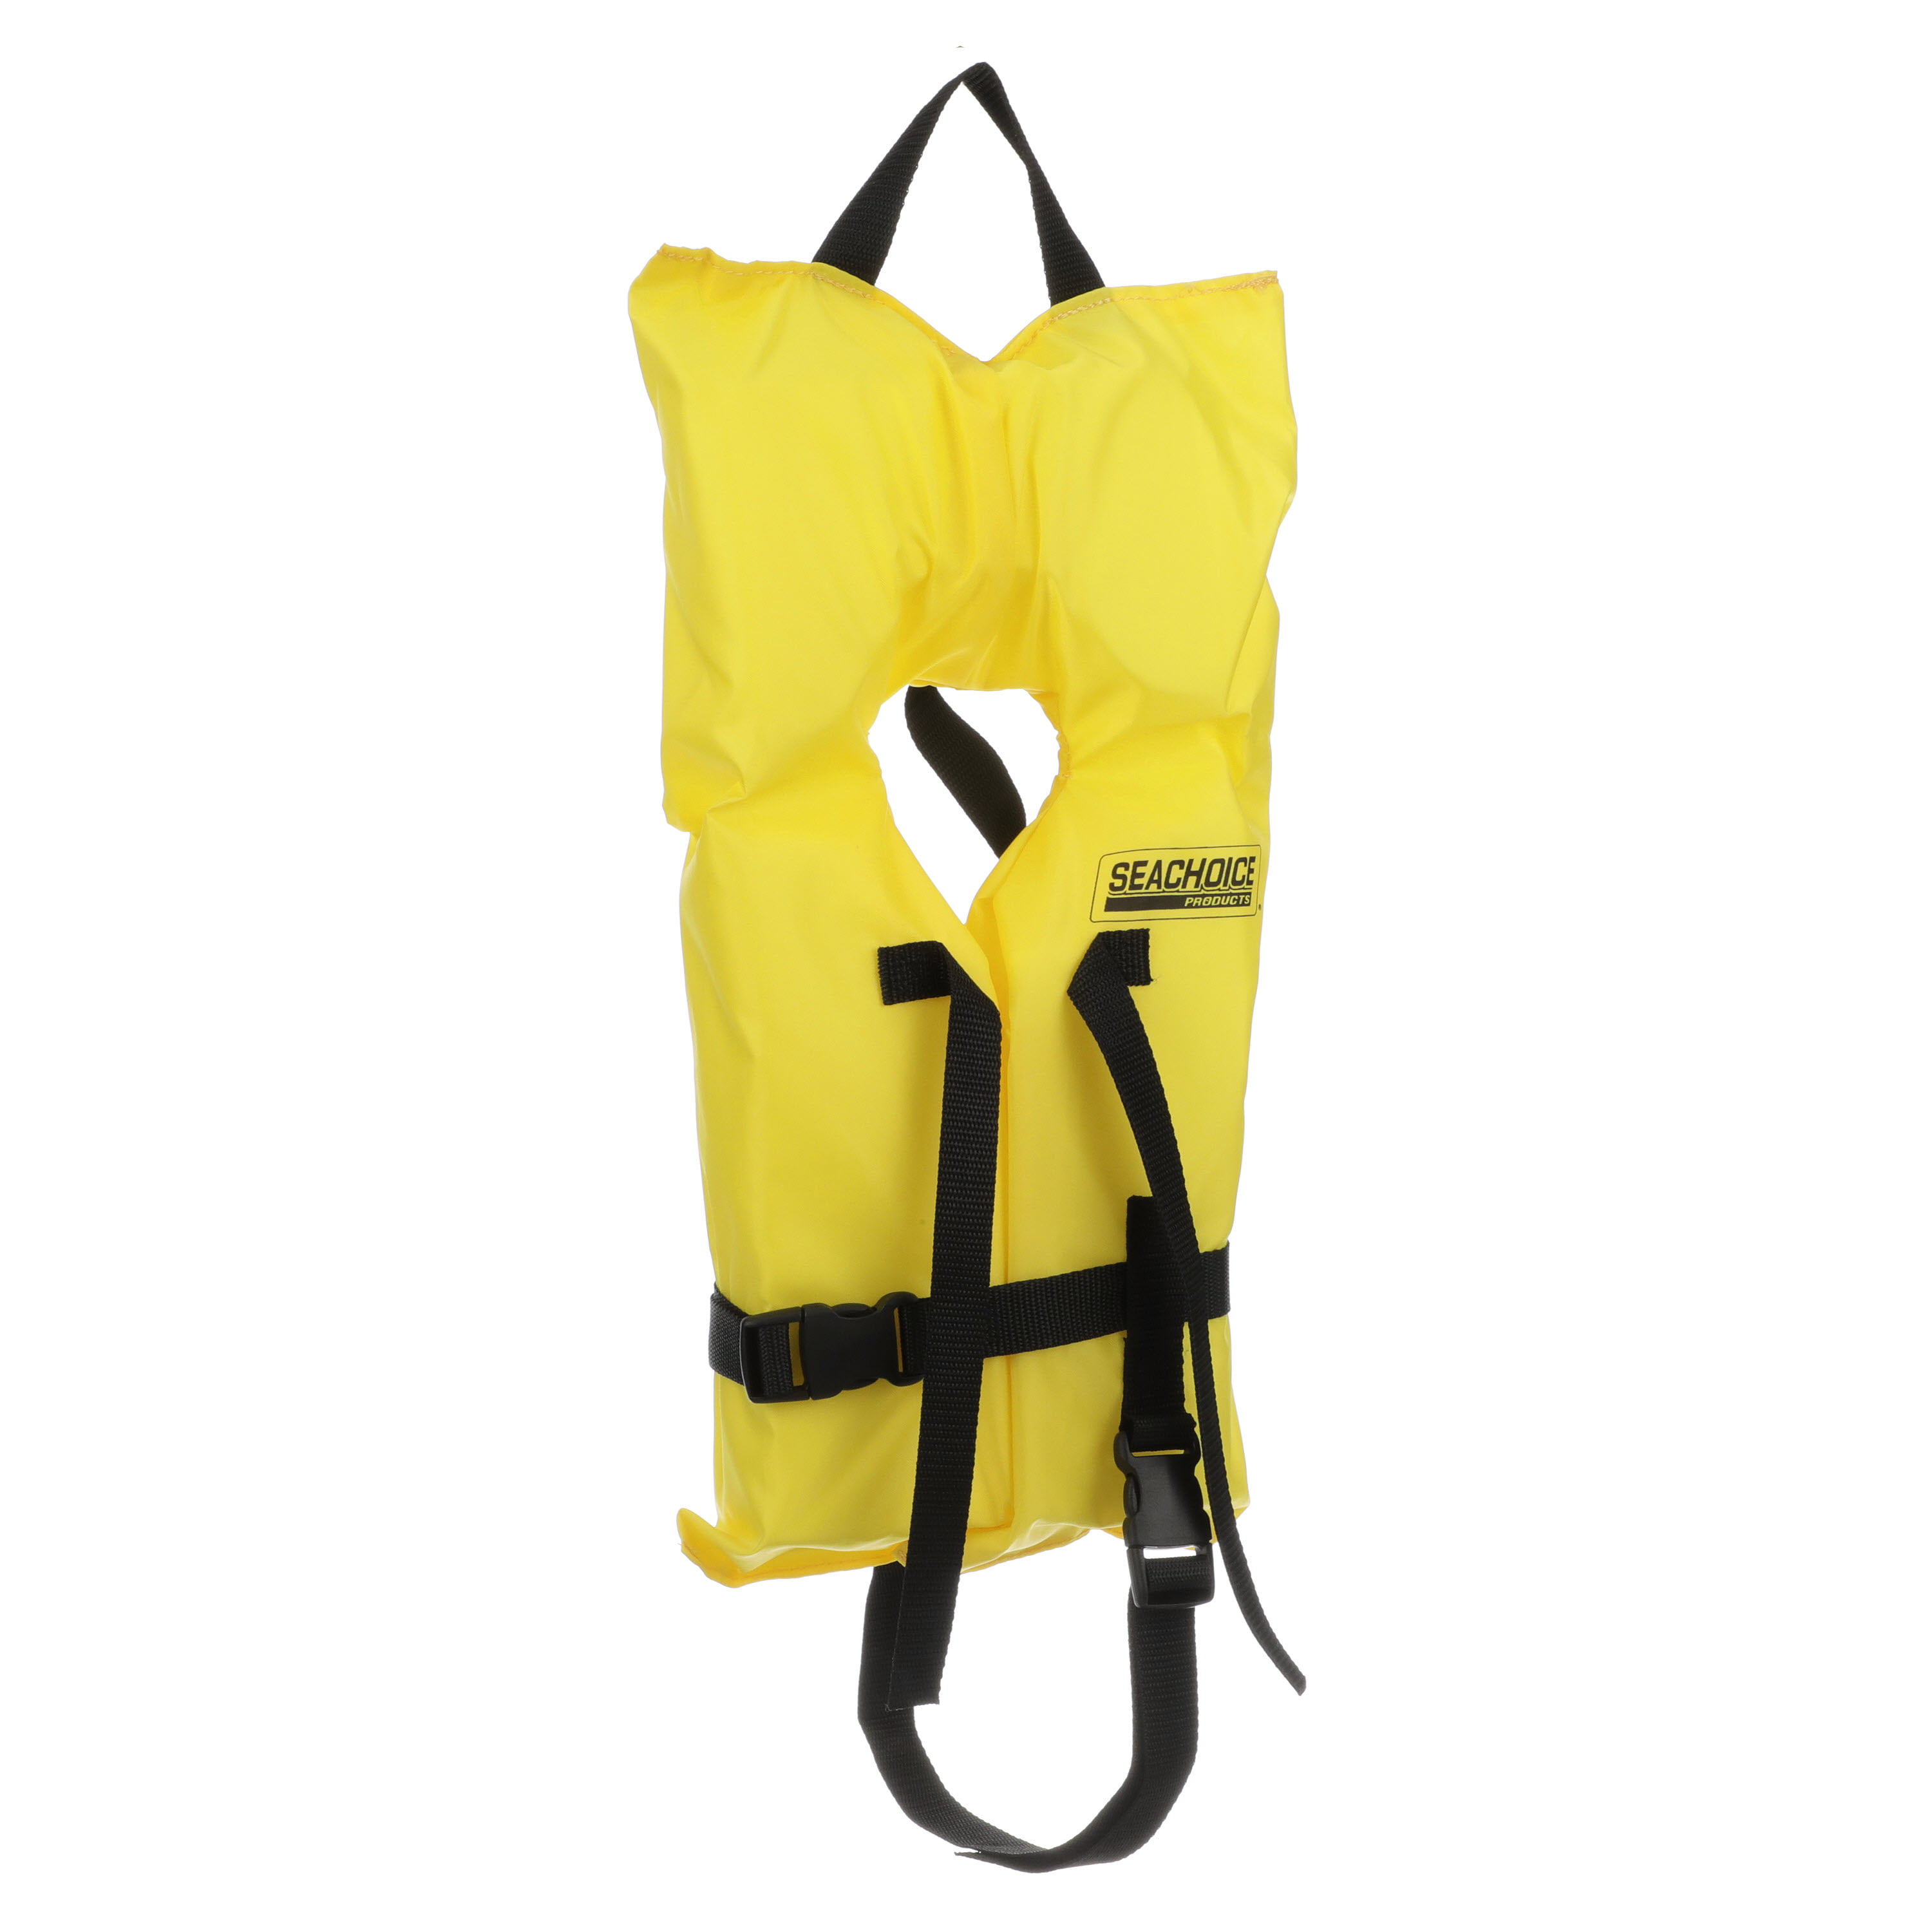 Seachoice Life Vest, Type II Personal Flotation Device, Yellow, Child 